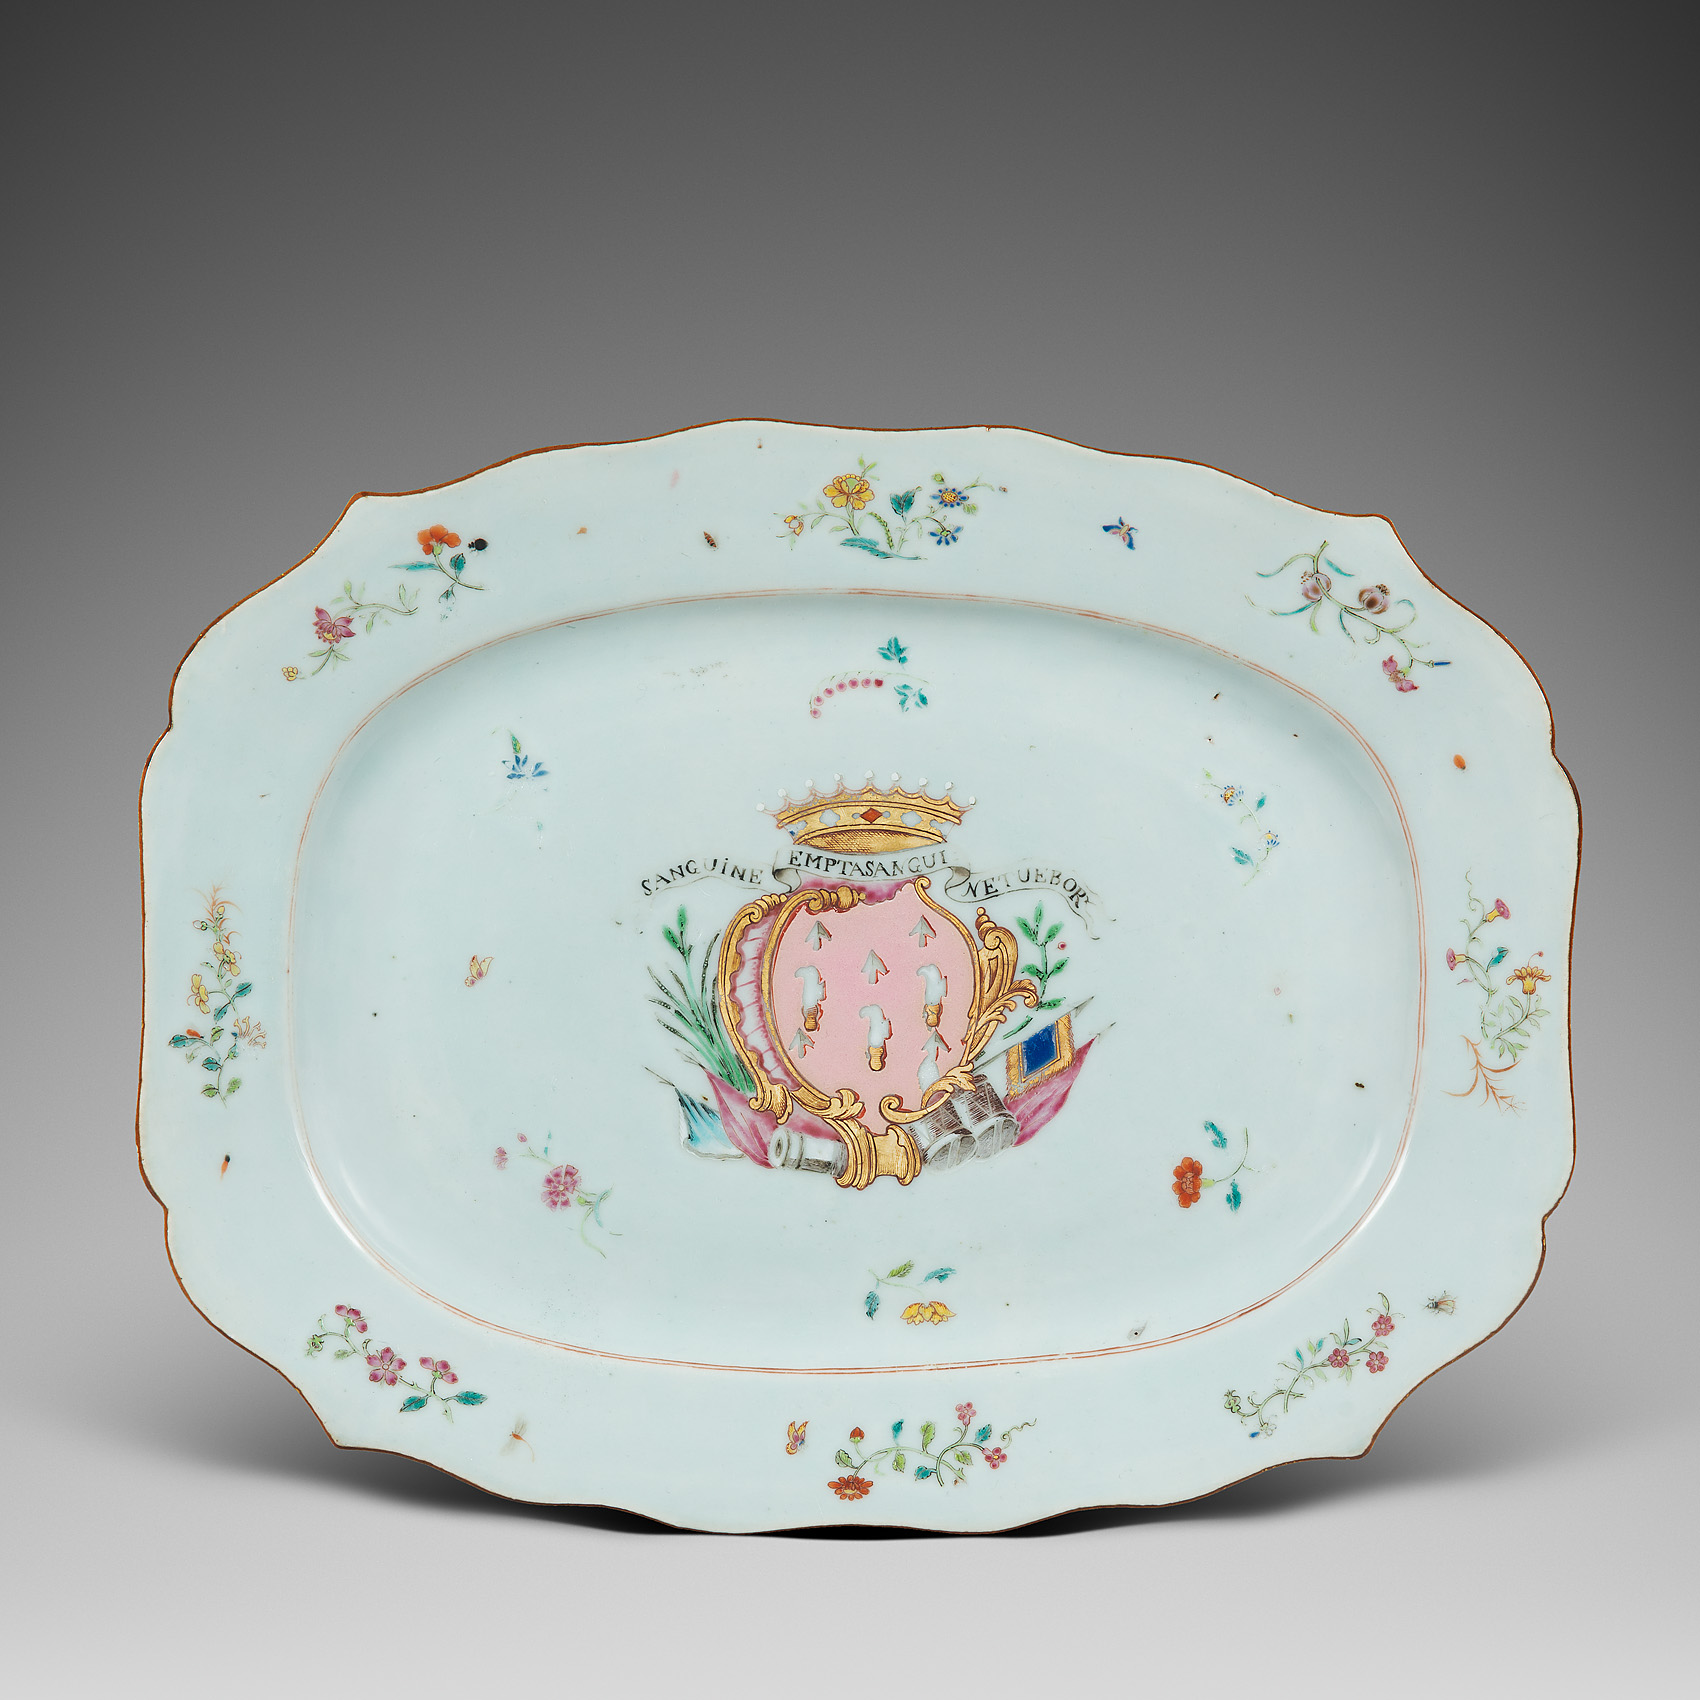 Porcelaine Qianlong (12736-1795), ca. 1760, Chine